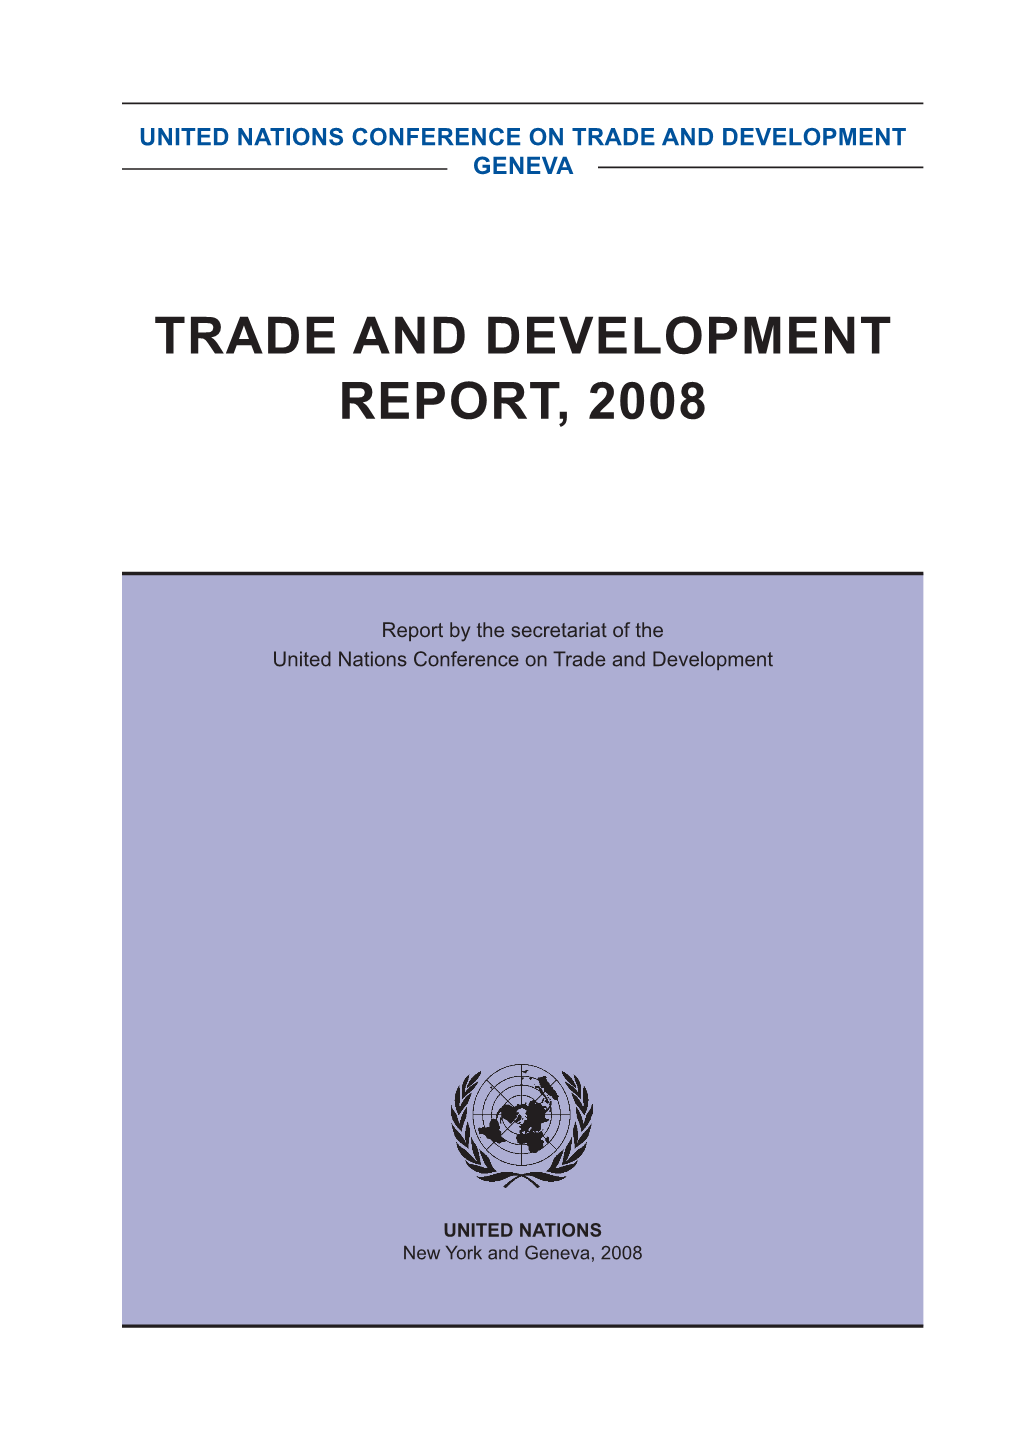 Trade and Development Report, 2008